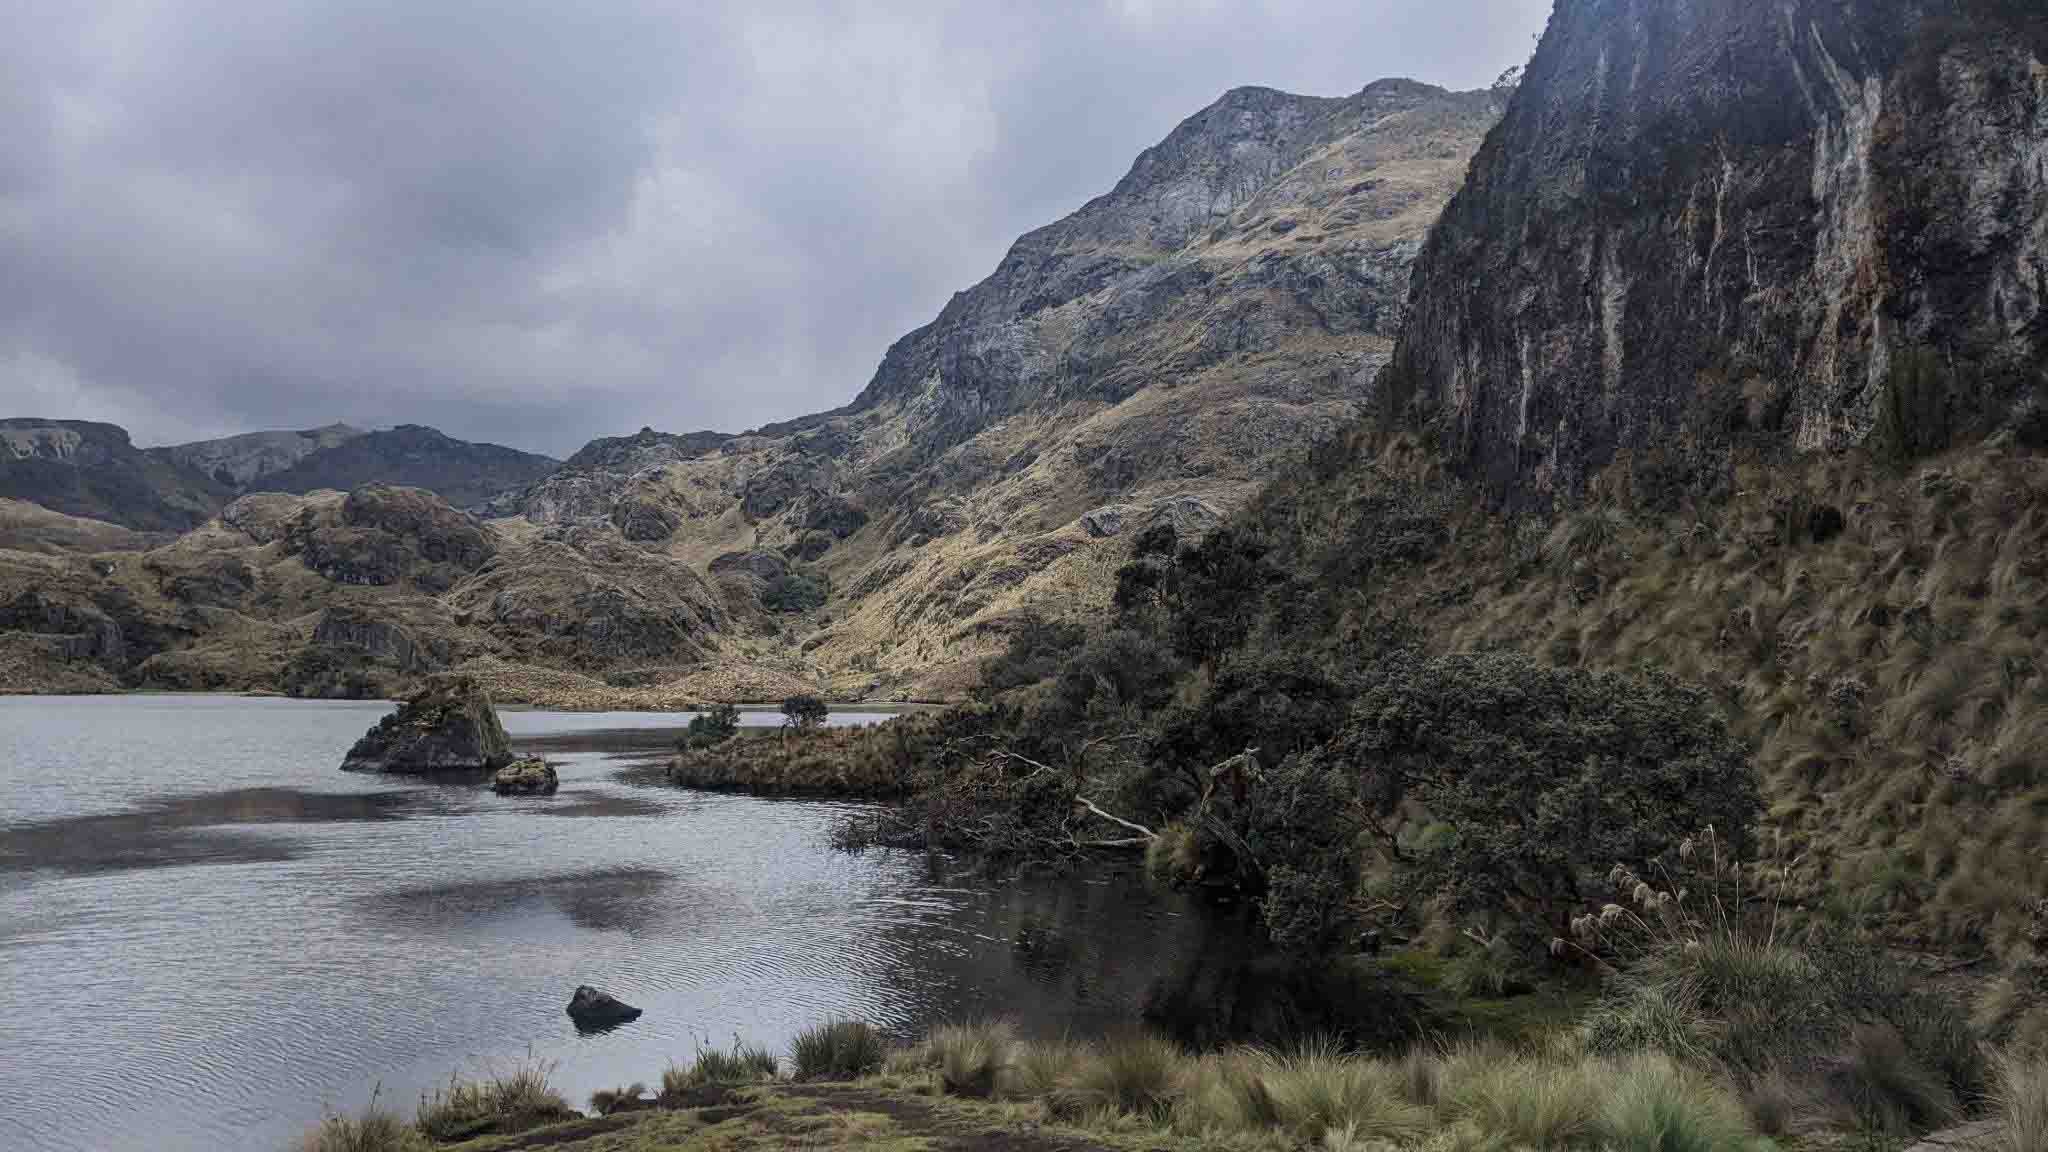 Parque Nacional Cajas - Ecuador - Pumamaqui